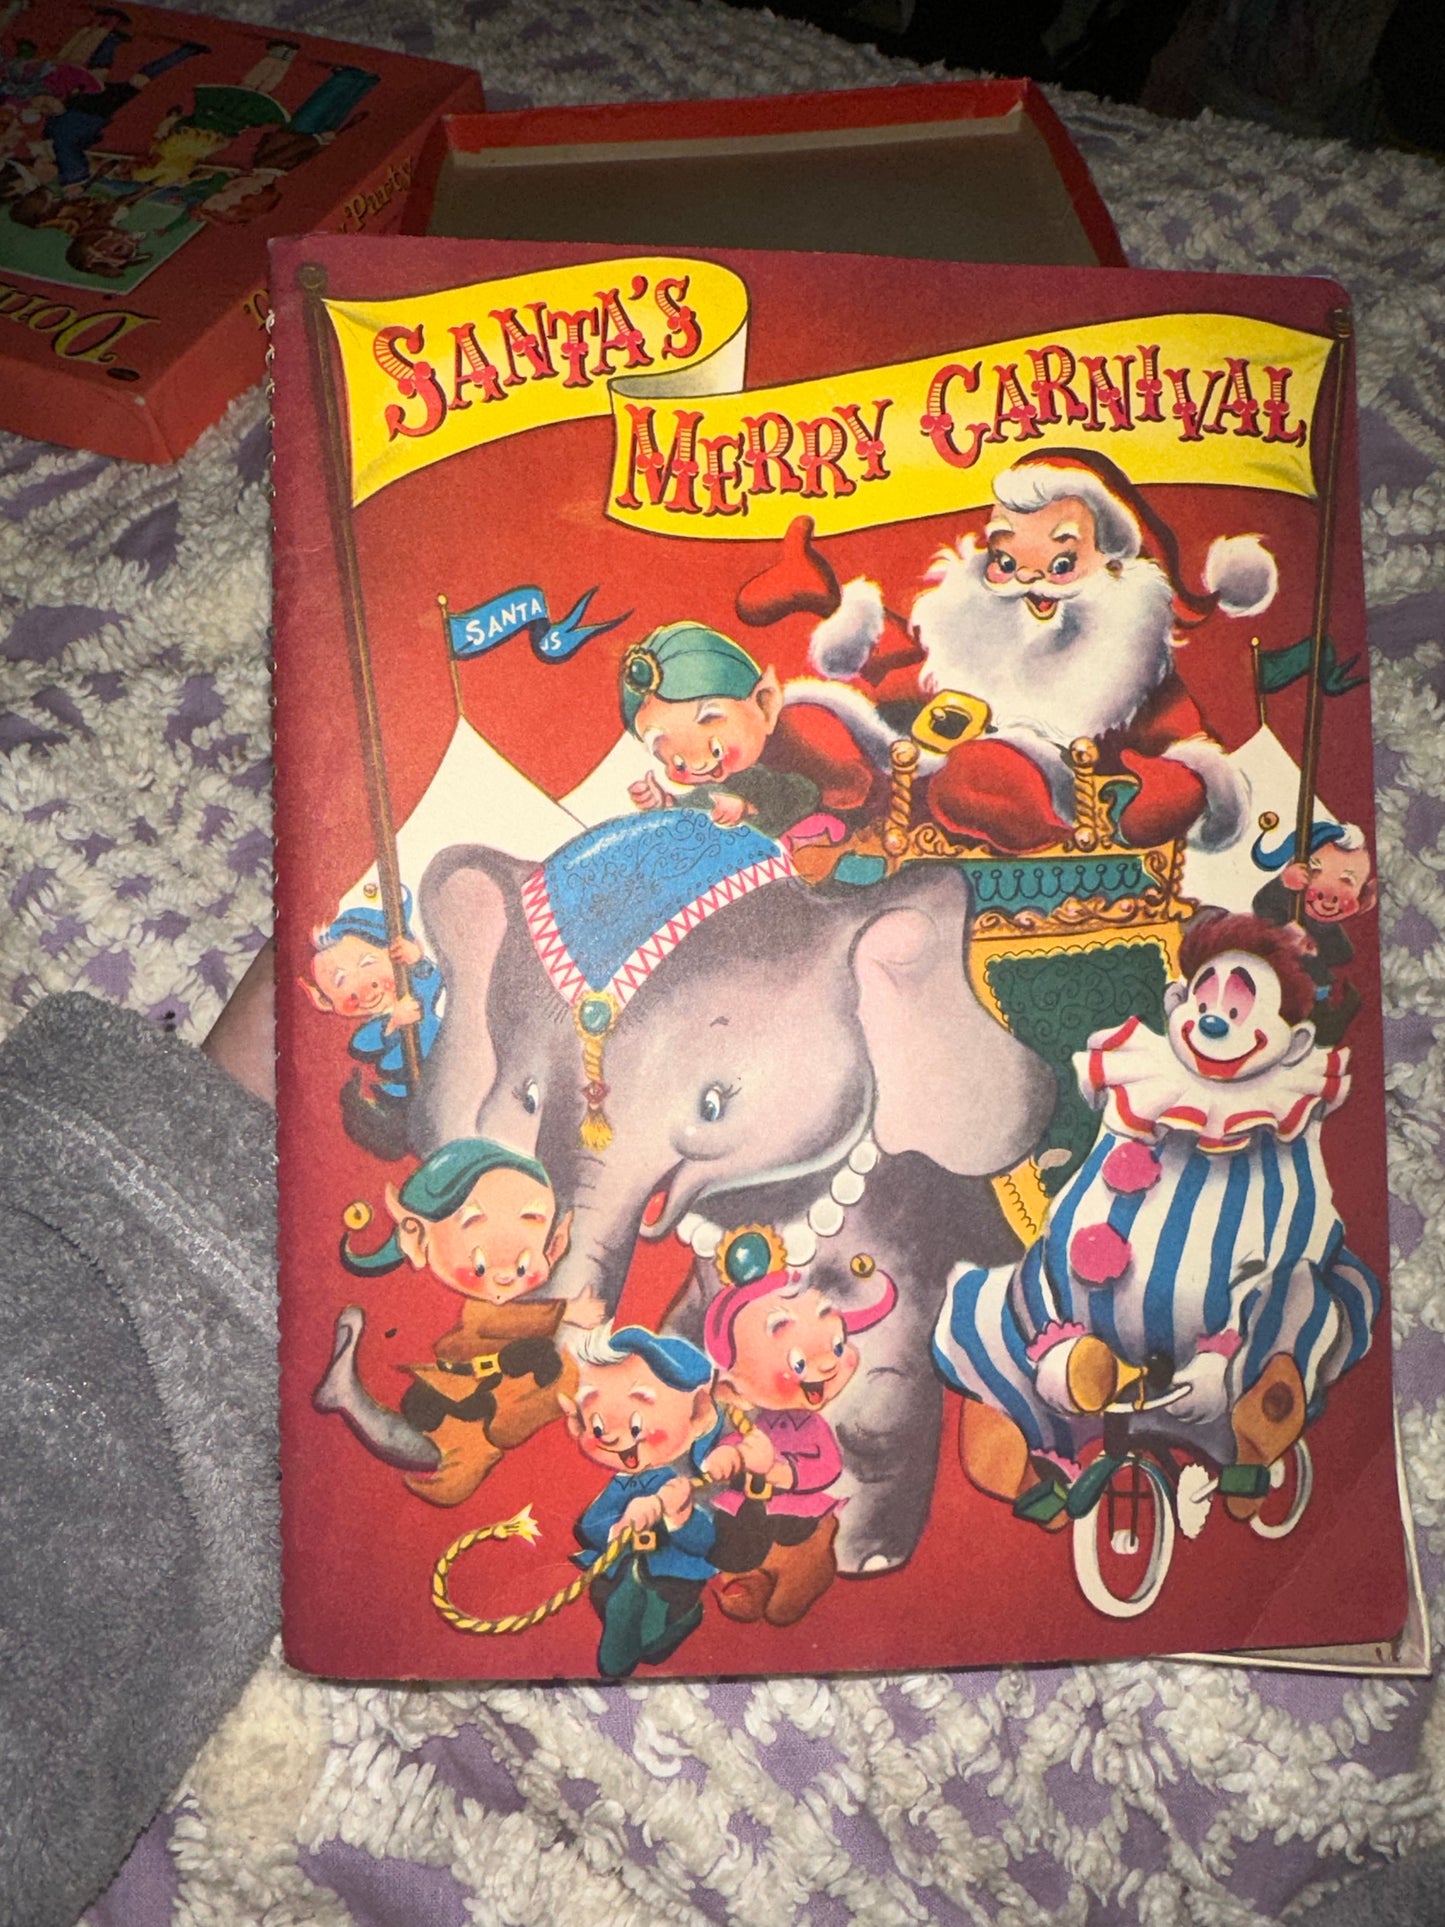 Vintage 1955 Santa’s Merry Carnival by Dorothy N. King Paperback Pop-Up Book w/ Original Box